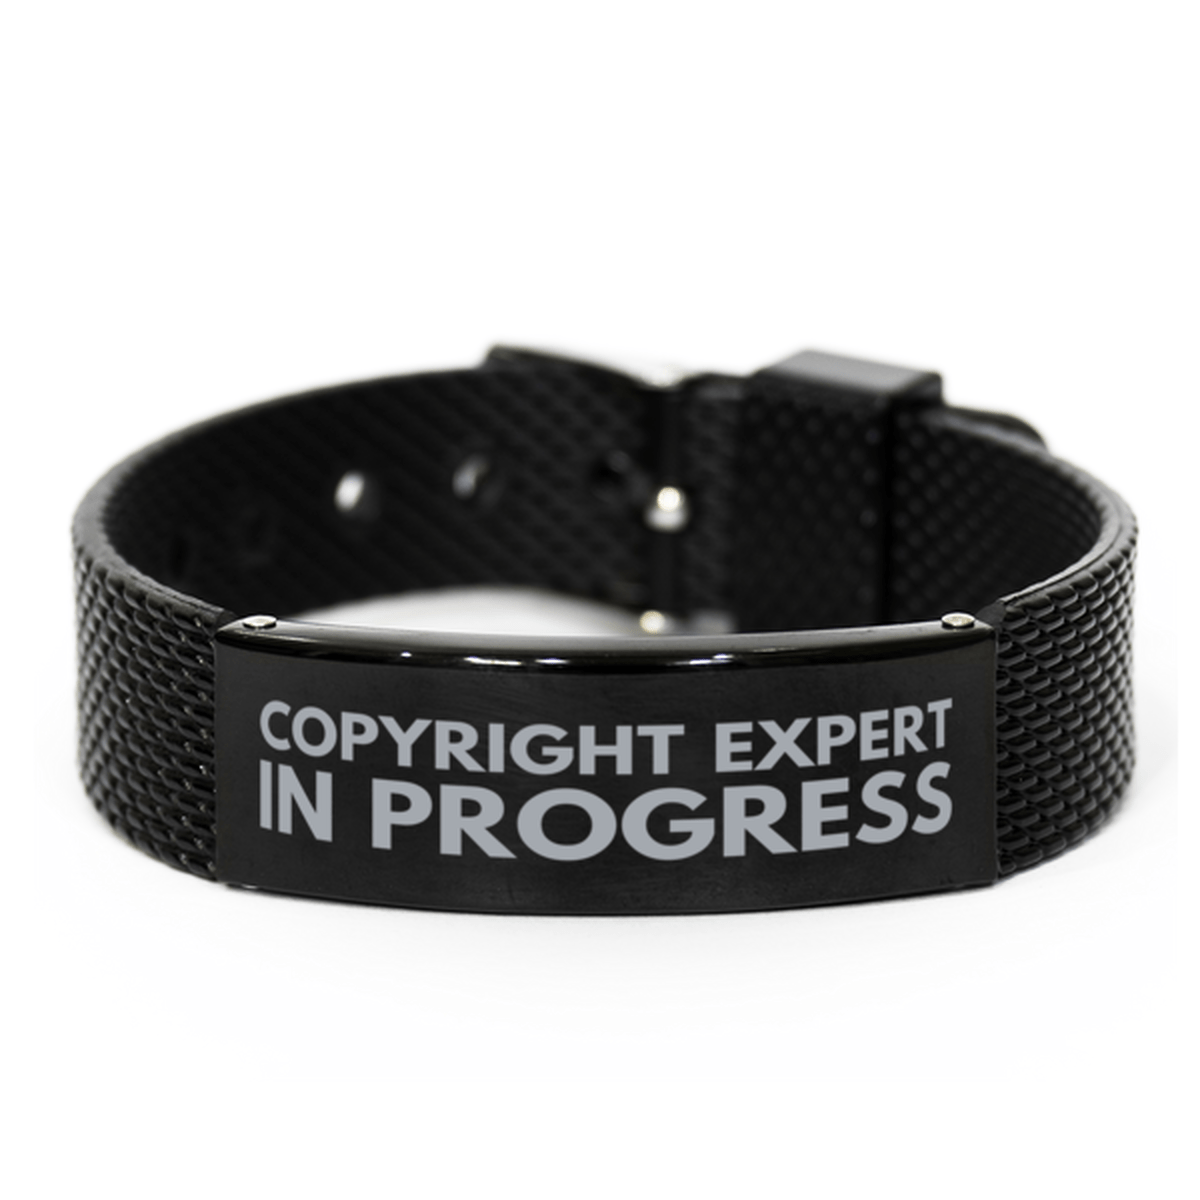 Inspirational Copyright Expert Black Shark Mesh Bracelet, Copyright Expert In Progress, Best Graduation Gifts for Students